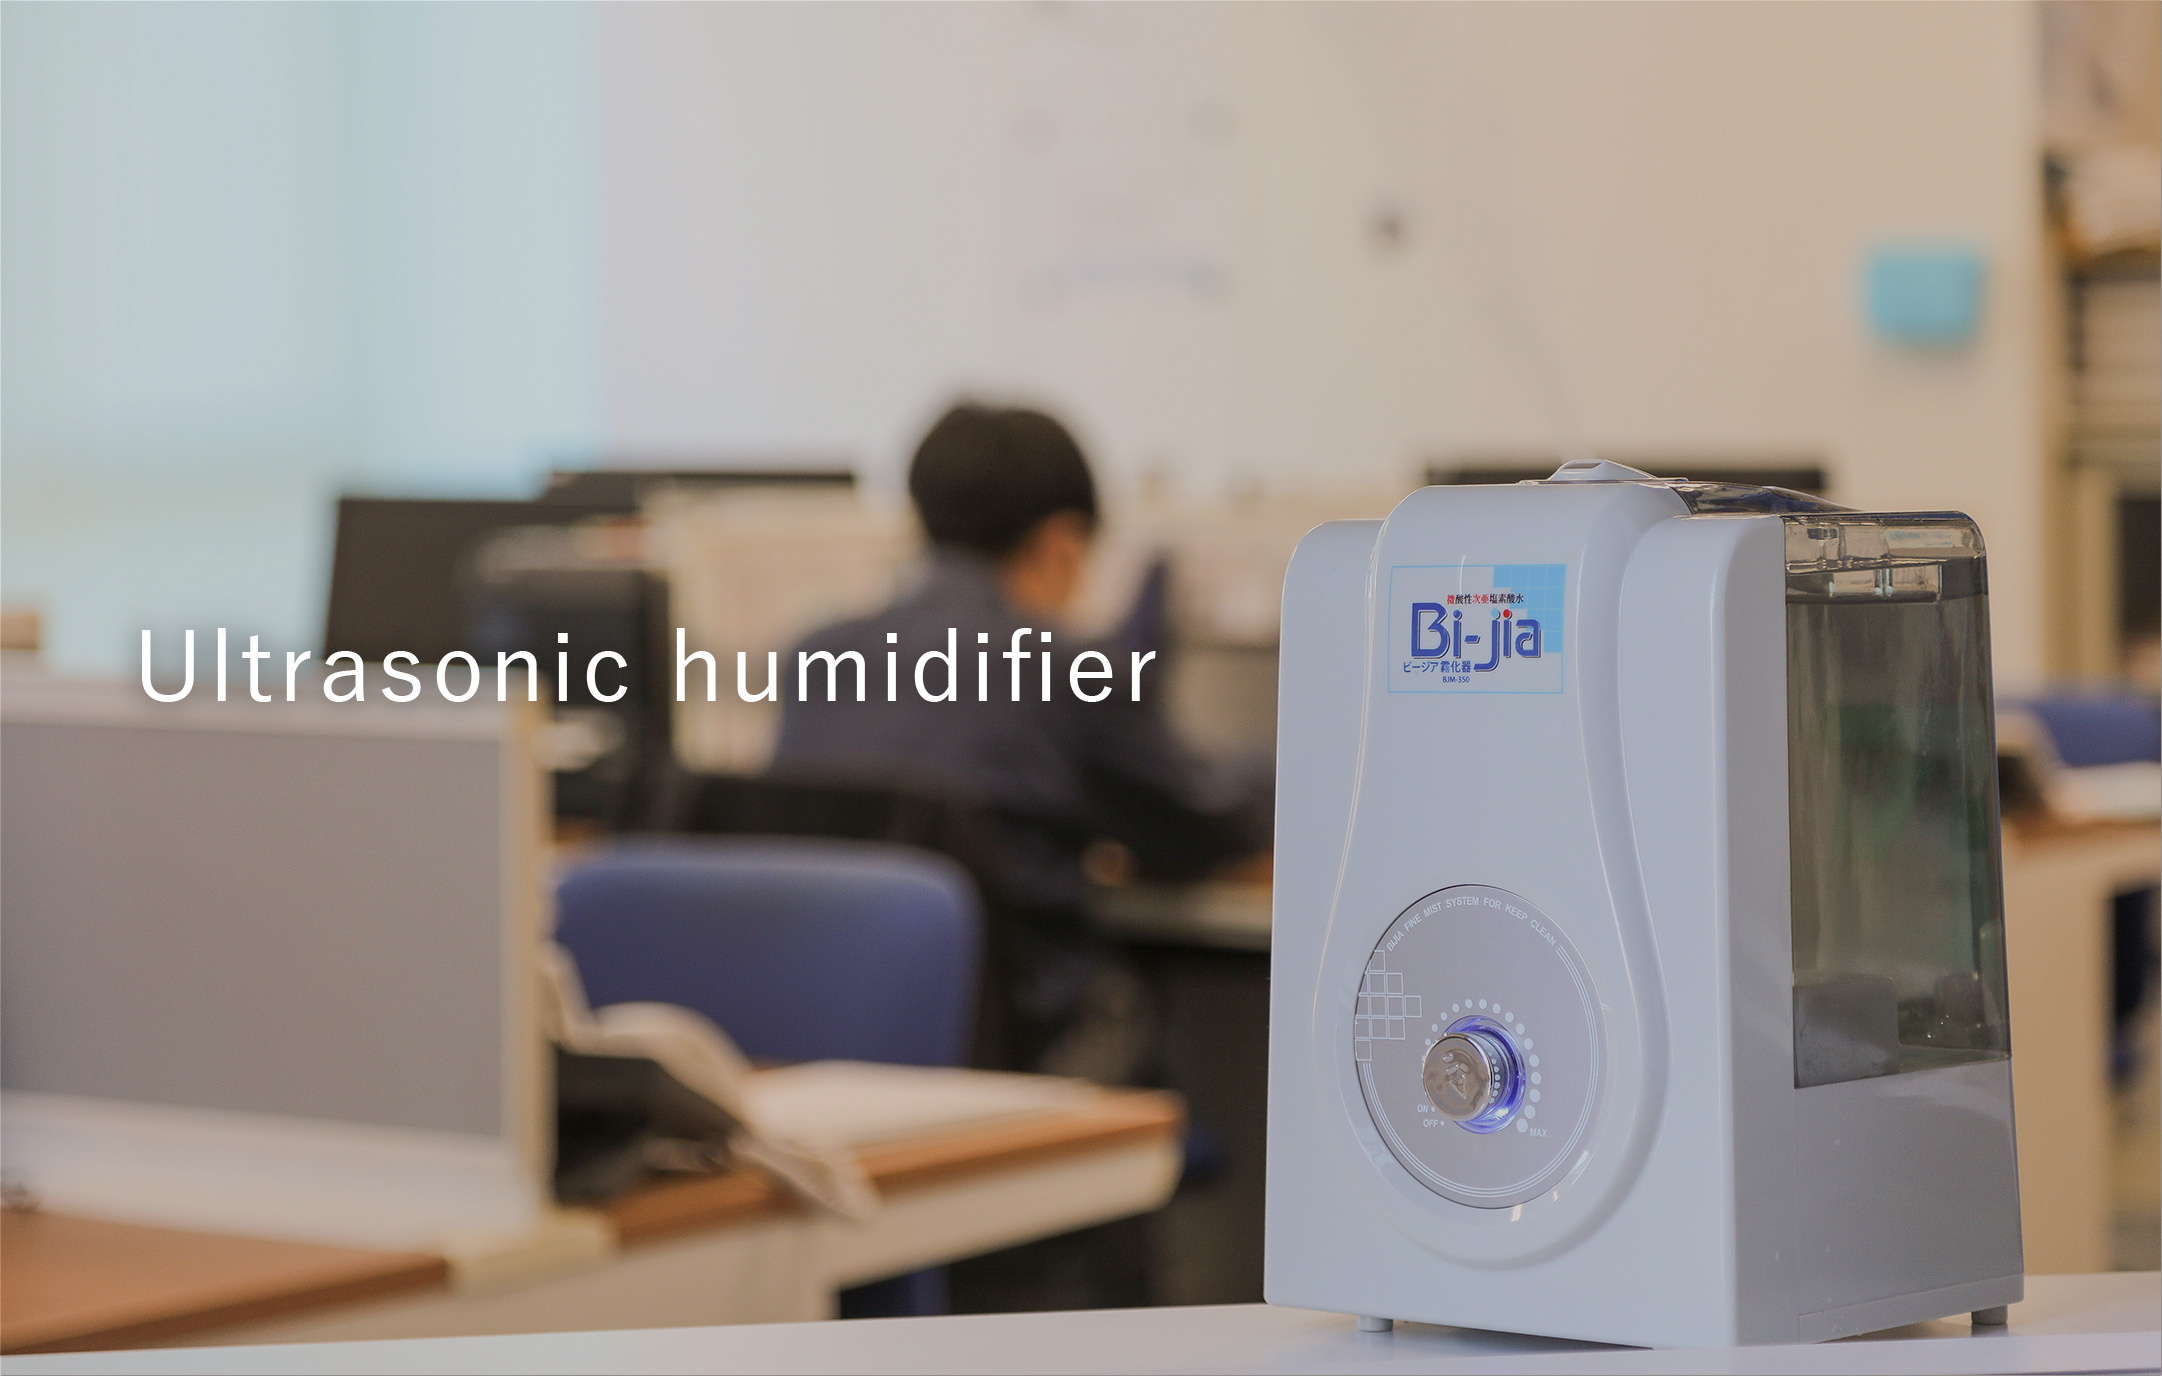 Ultrasonic humidifier